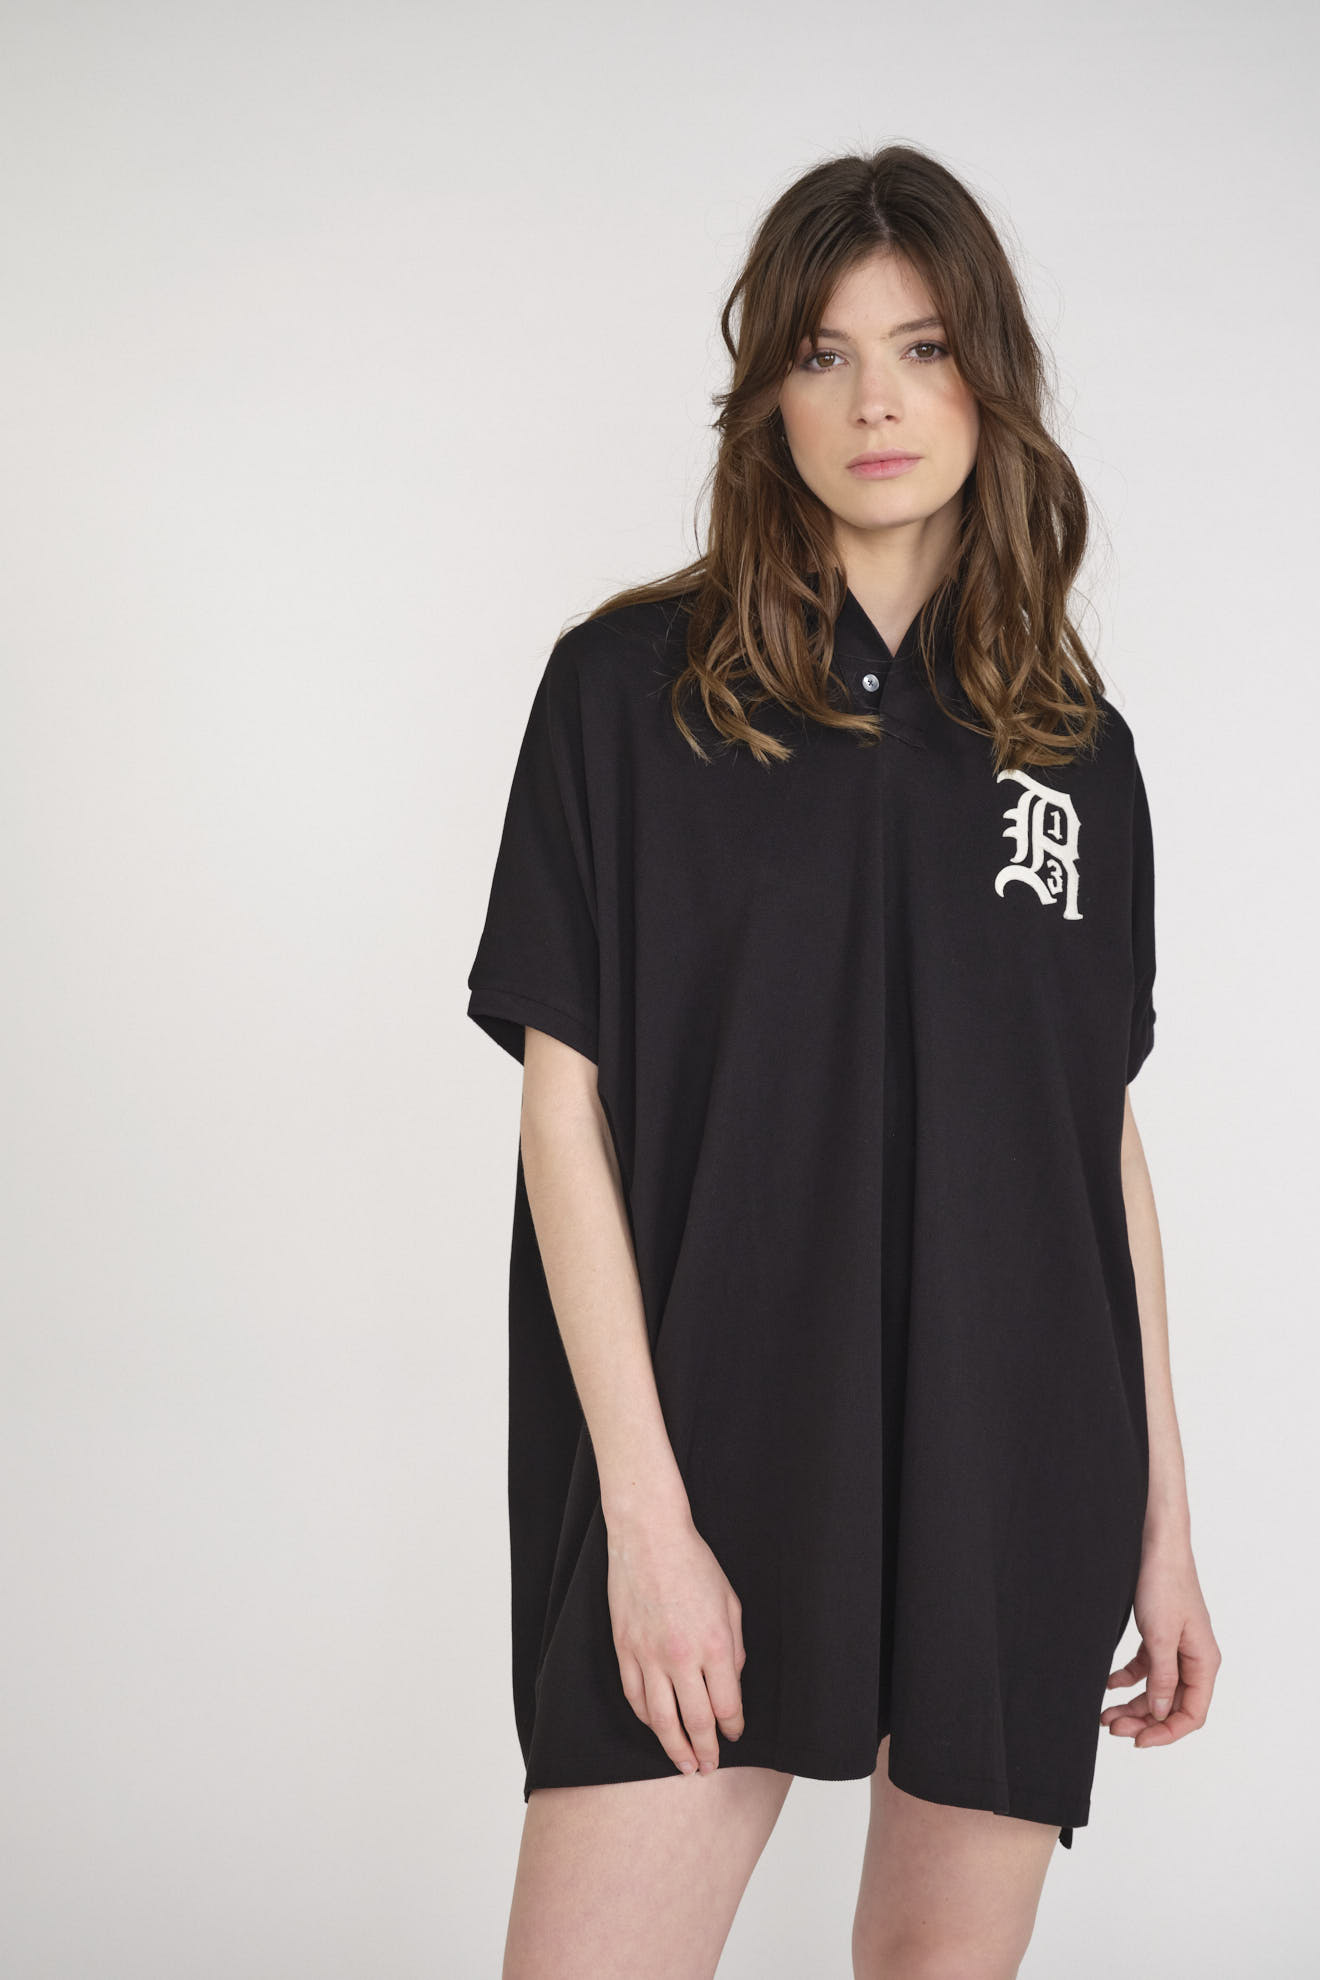 R13 Logo Polo Shirt Dress - T-shirt dress with logo print black S